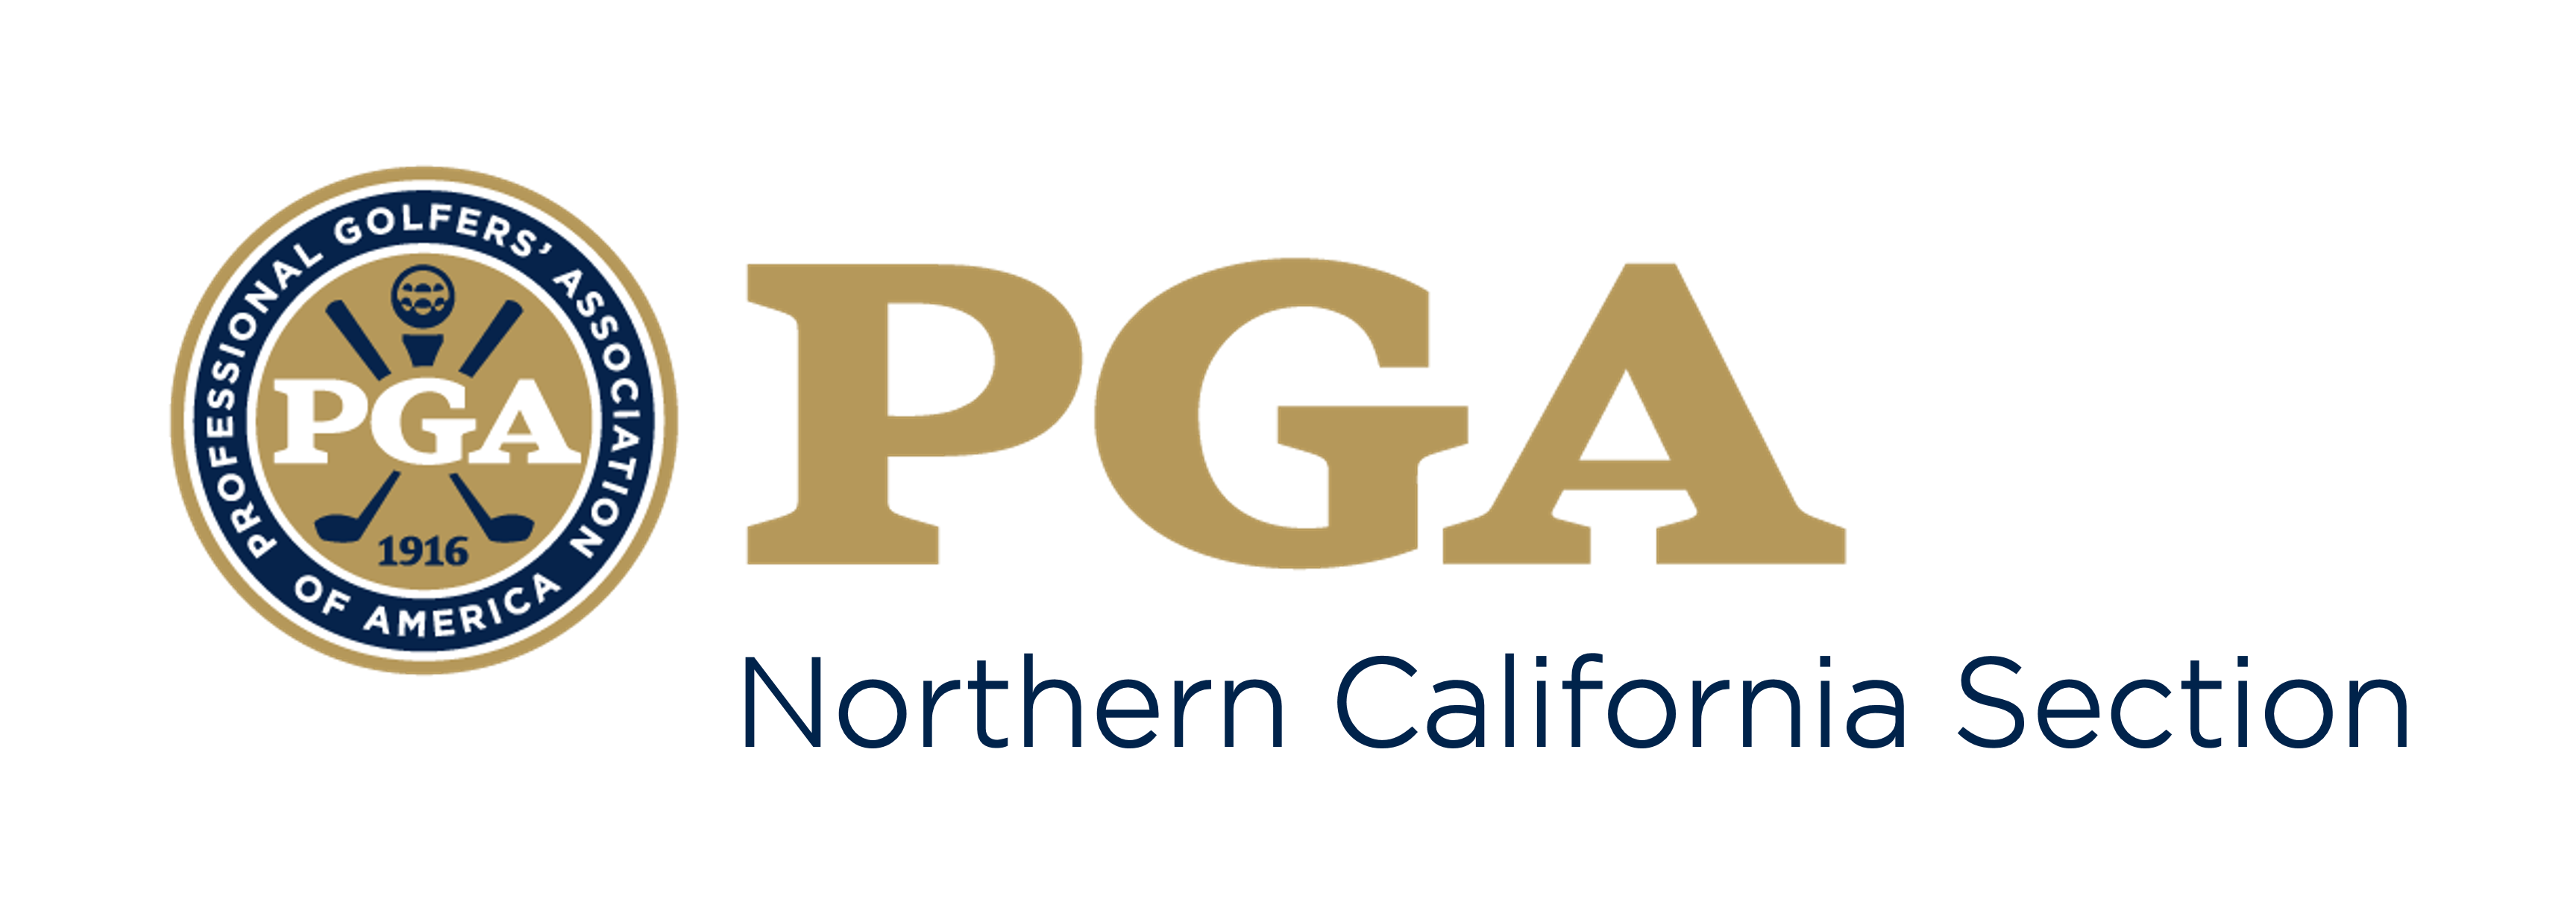 northern california pga section